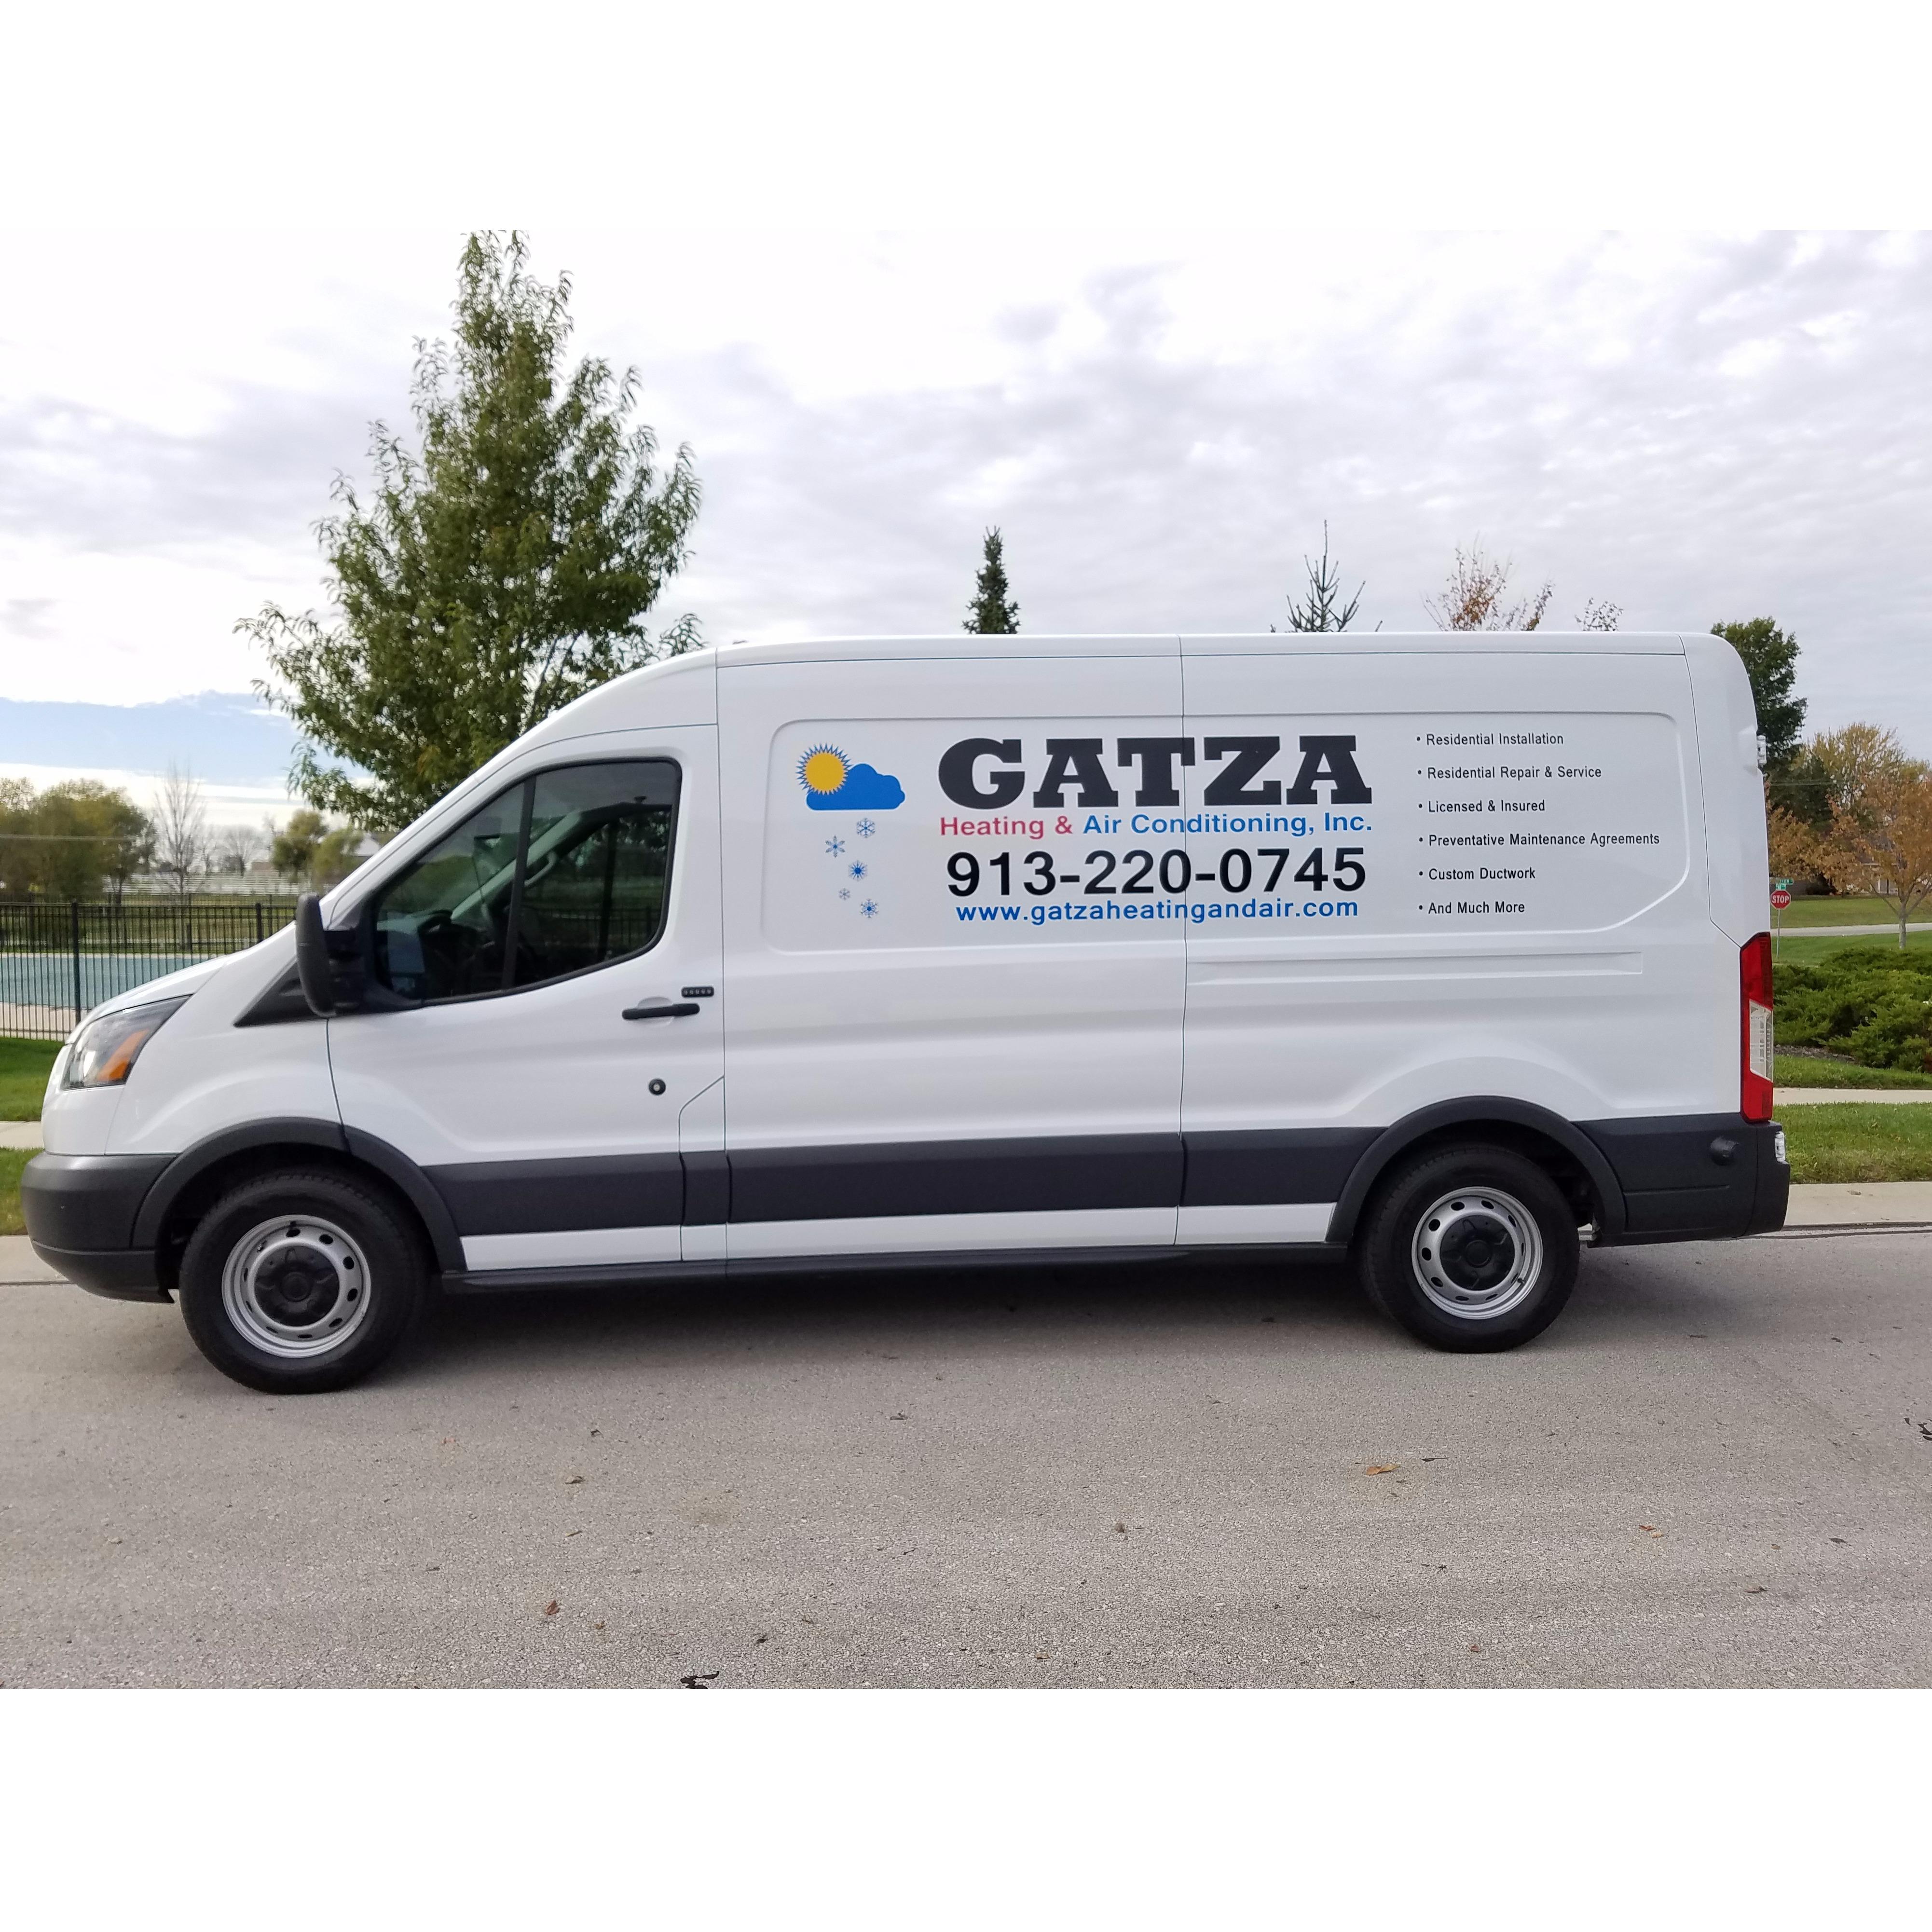 Gatza Heating & Air Conditioning, Inc - Olathe, KS 66062 - (913)220-0745 | ShowMeLocal.com